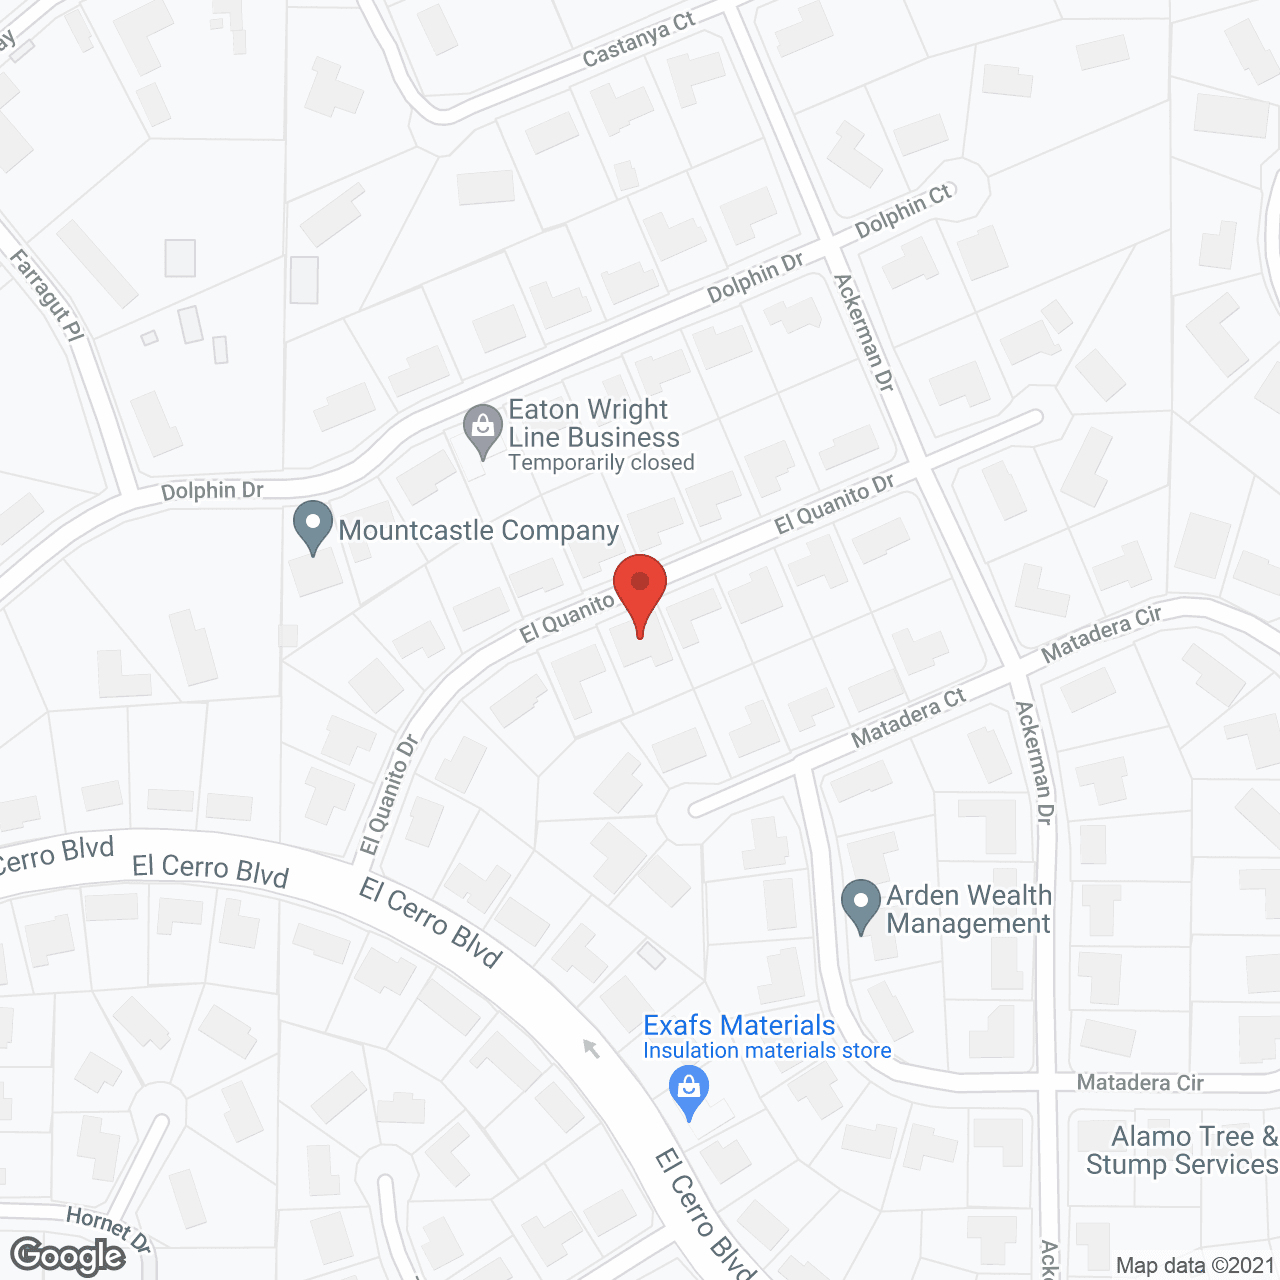 Danville Courtyard in google map